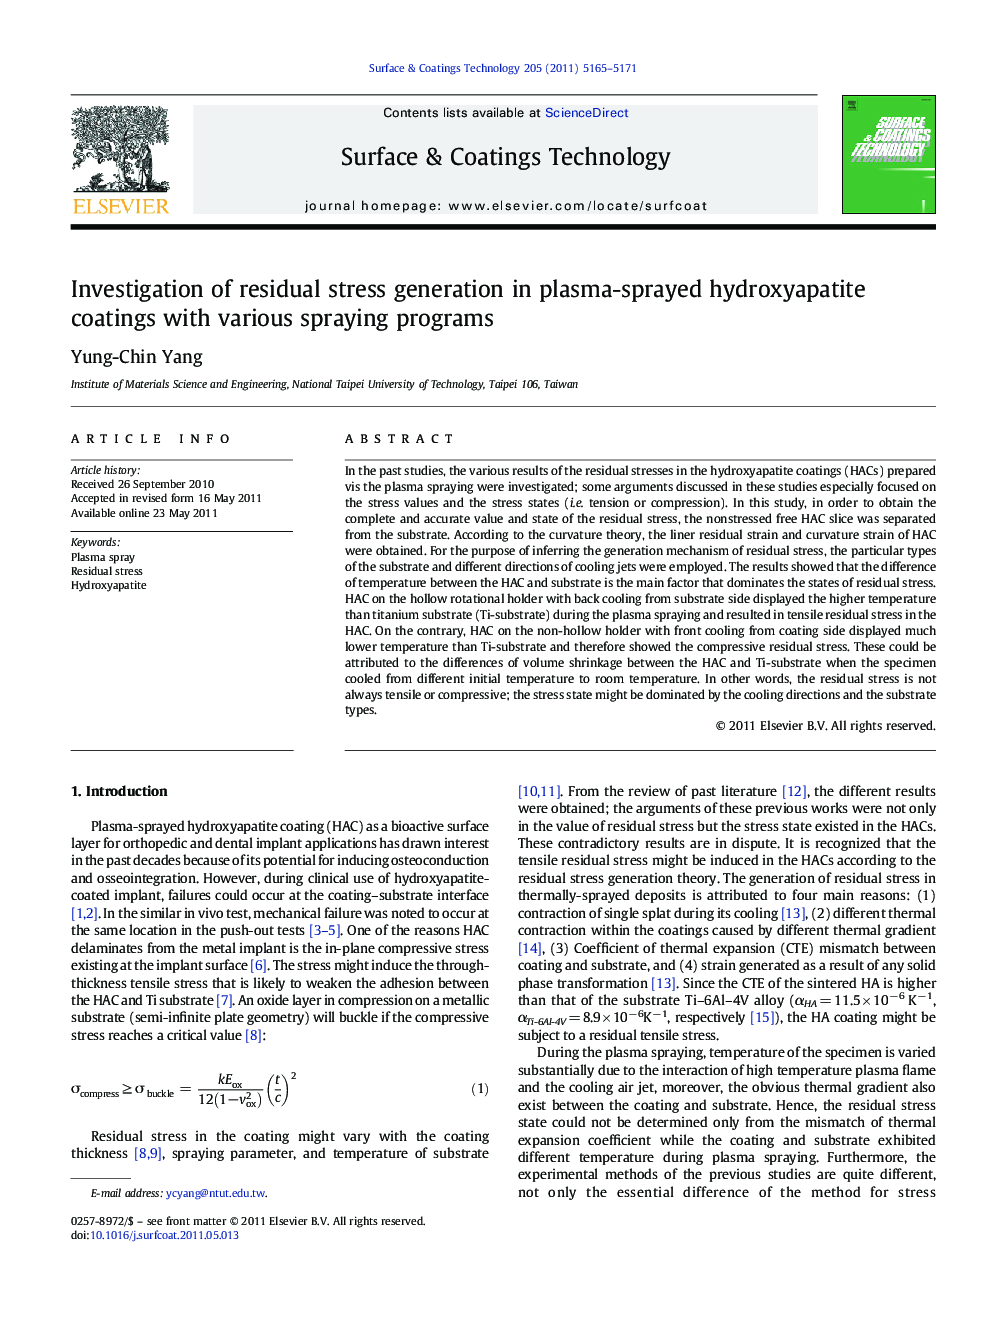 Investigation of residual stress generation in plasma-sprayed hydroxyapatite coatings with various spraying programs